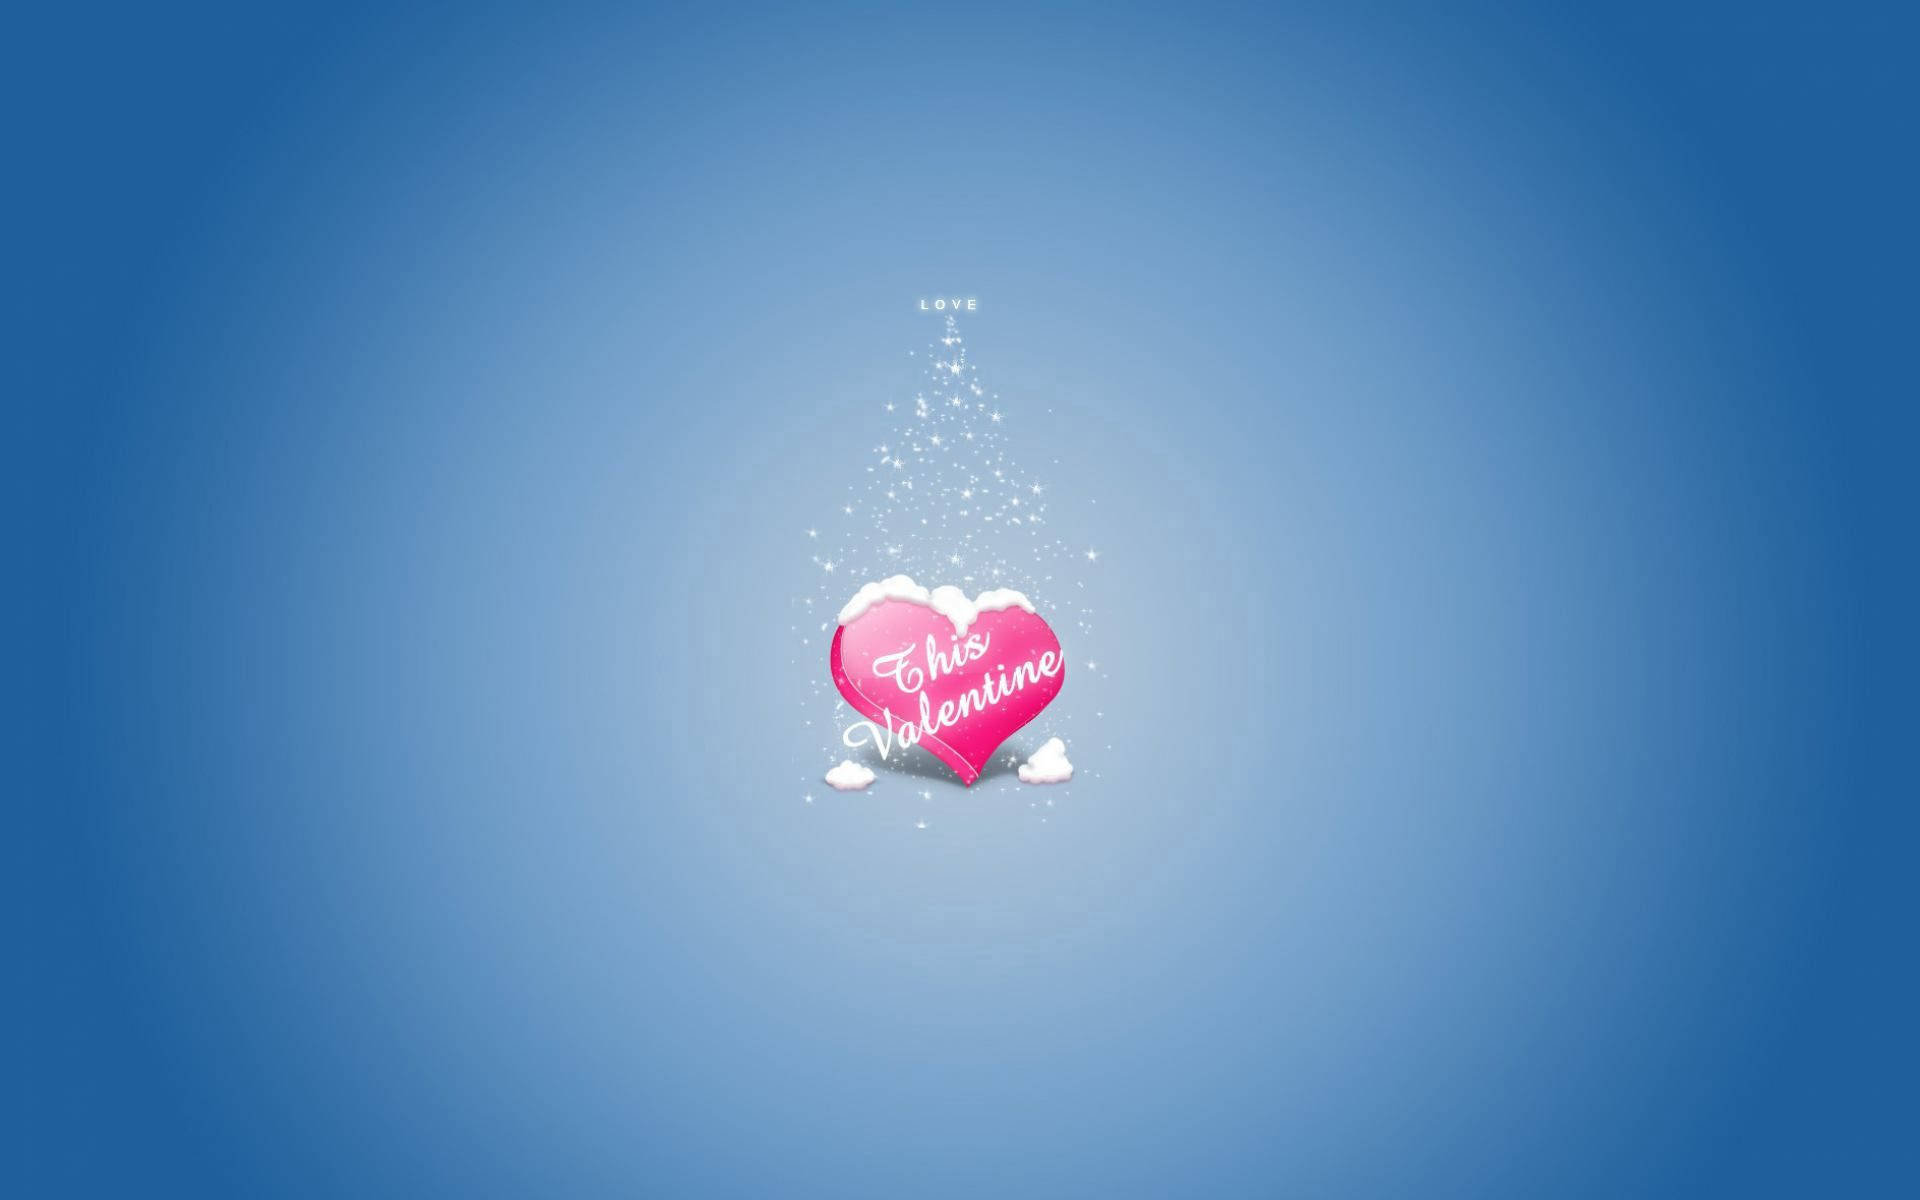 Pink Snow Heart On Valentine's Day Wallpaper